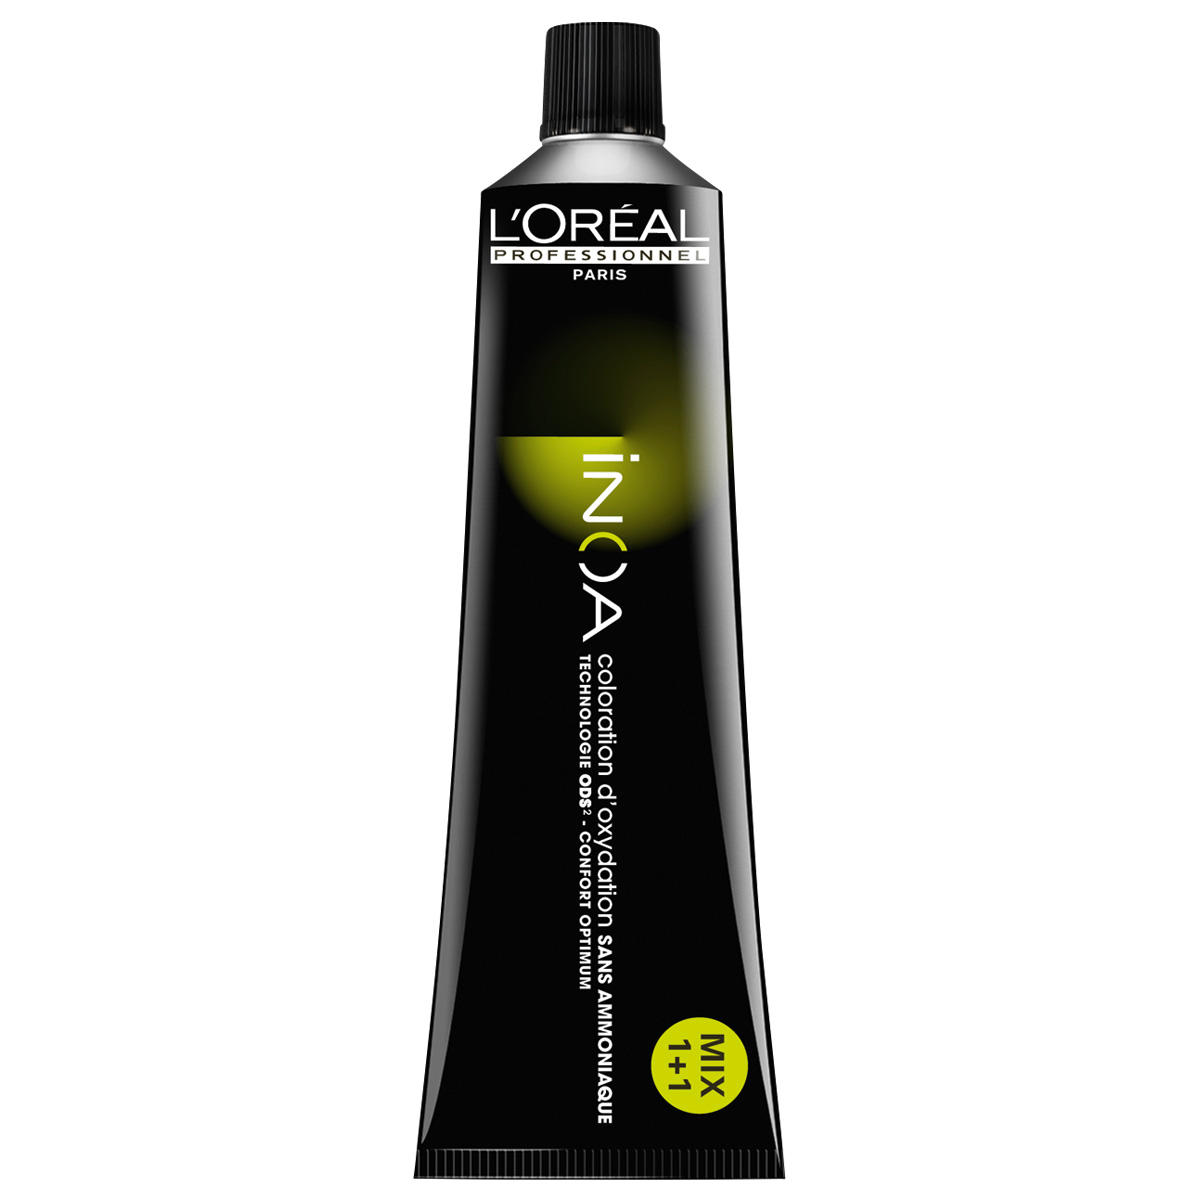 L'Oréal Professionnel Paris Coloration 7,34 Rubio medio dorado cobrizo, tubo 60 ml